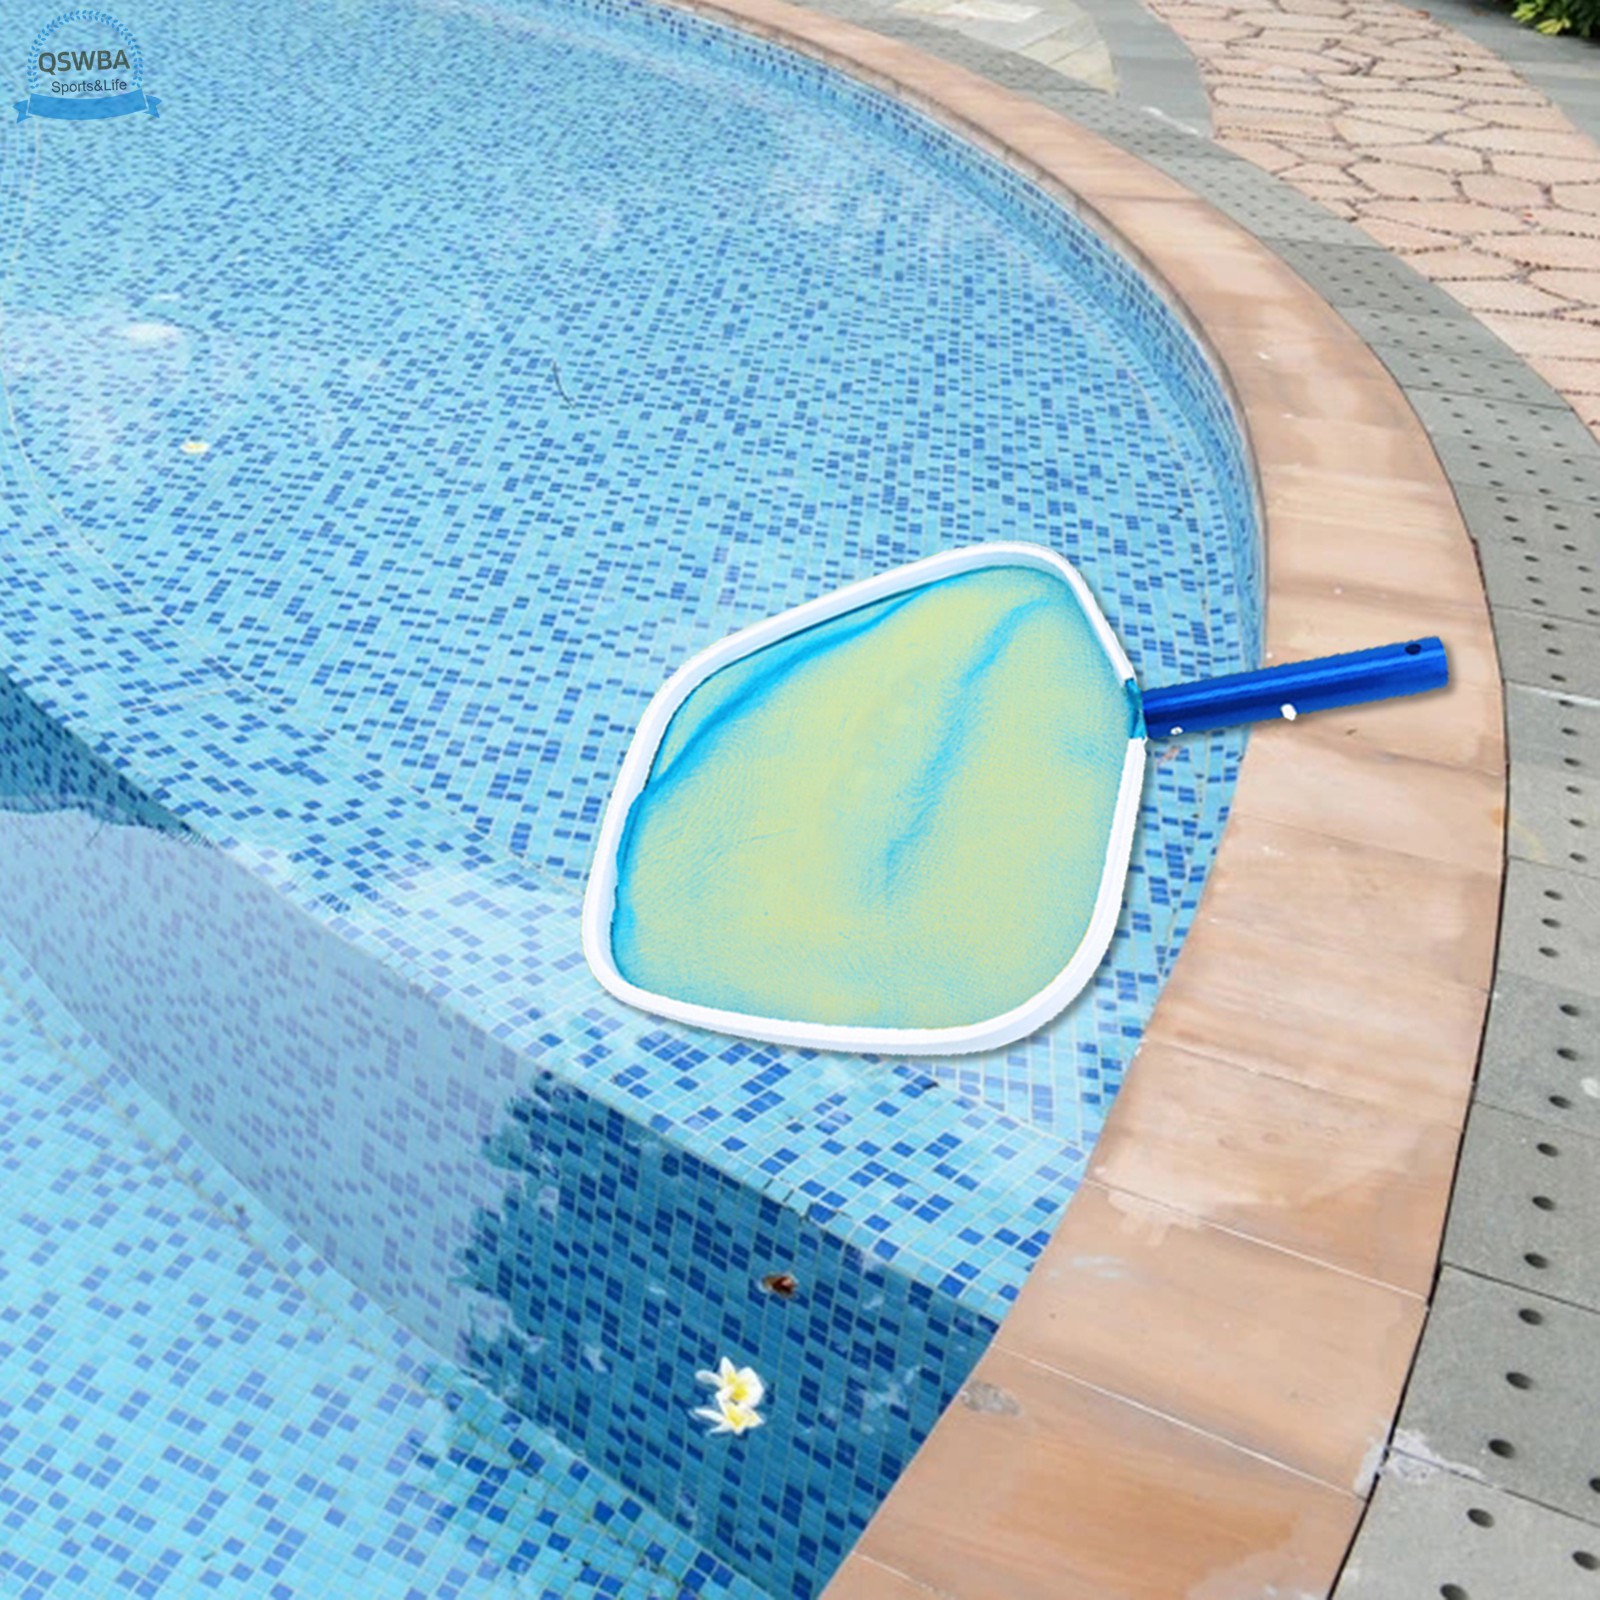 Qswba Swimming Pool Skimmer Net Heavy Duty Leaf Skimmer Net with Strong Reinforced Aluminum Alloy Frame